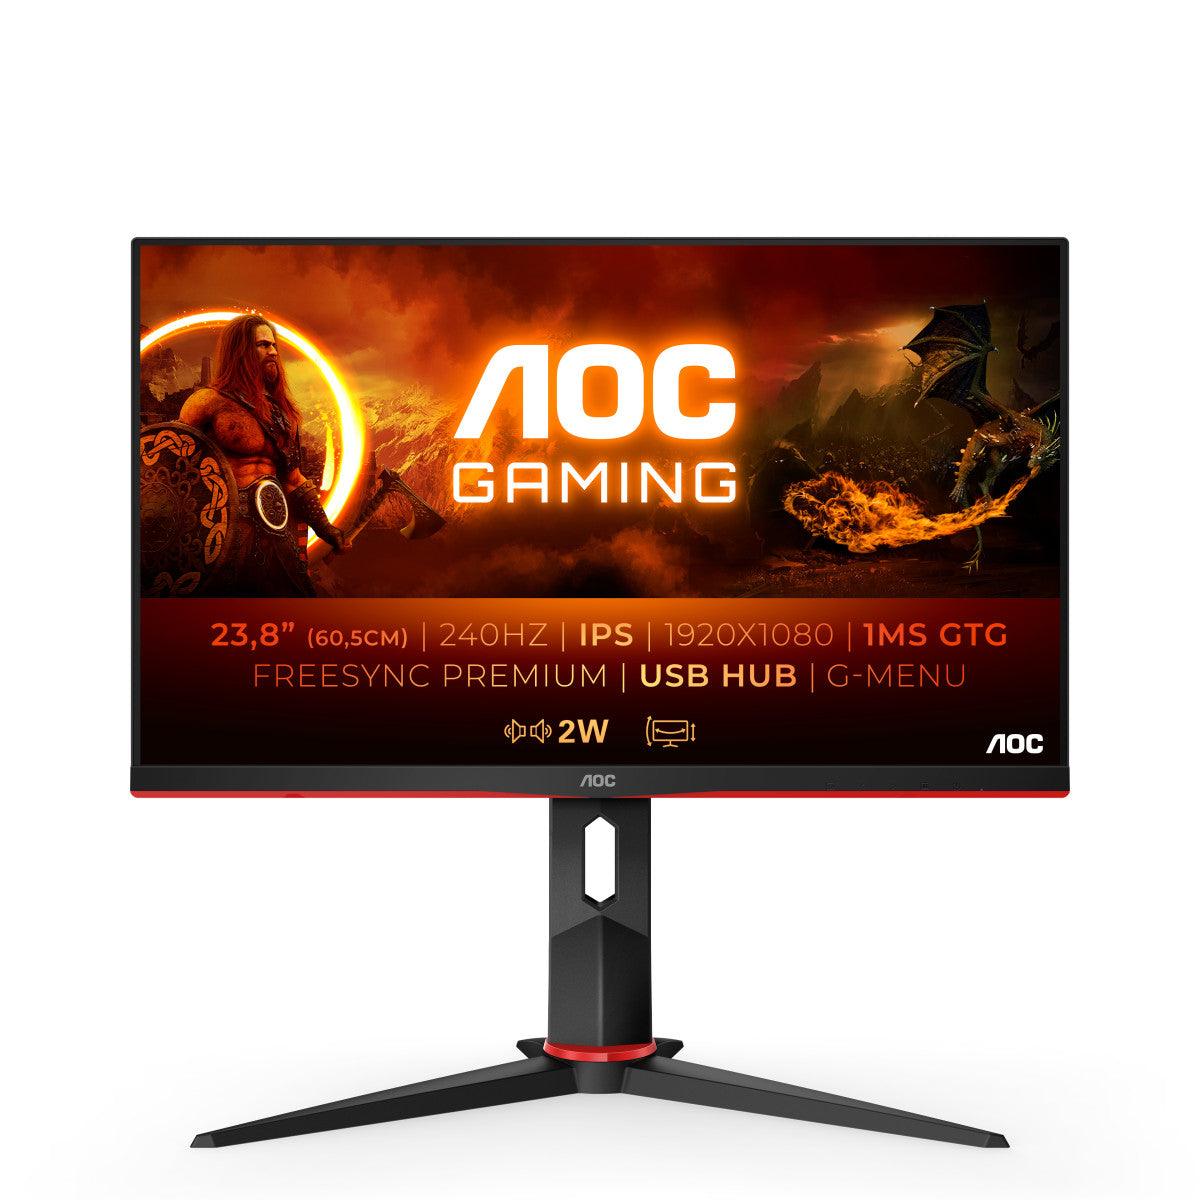 AOC Gaming - Want a New Gadget